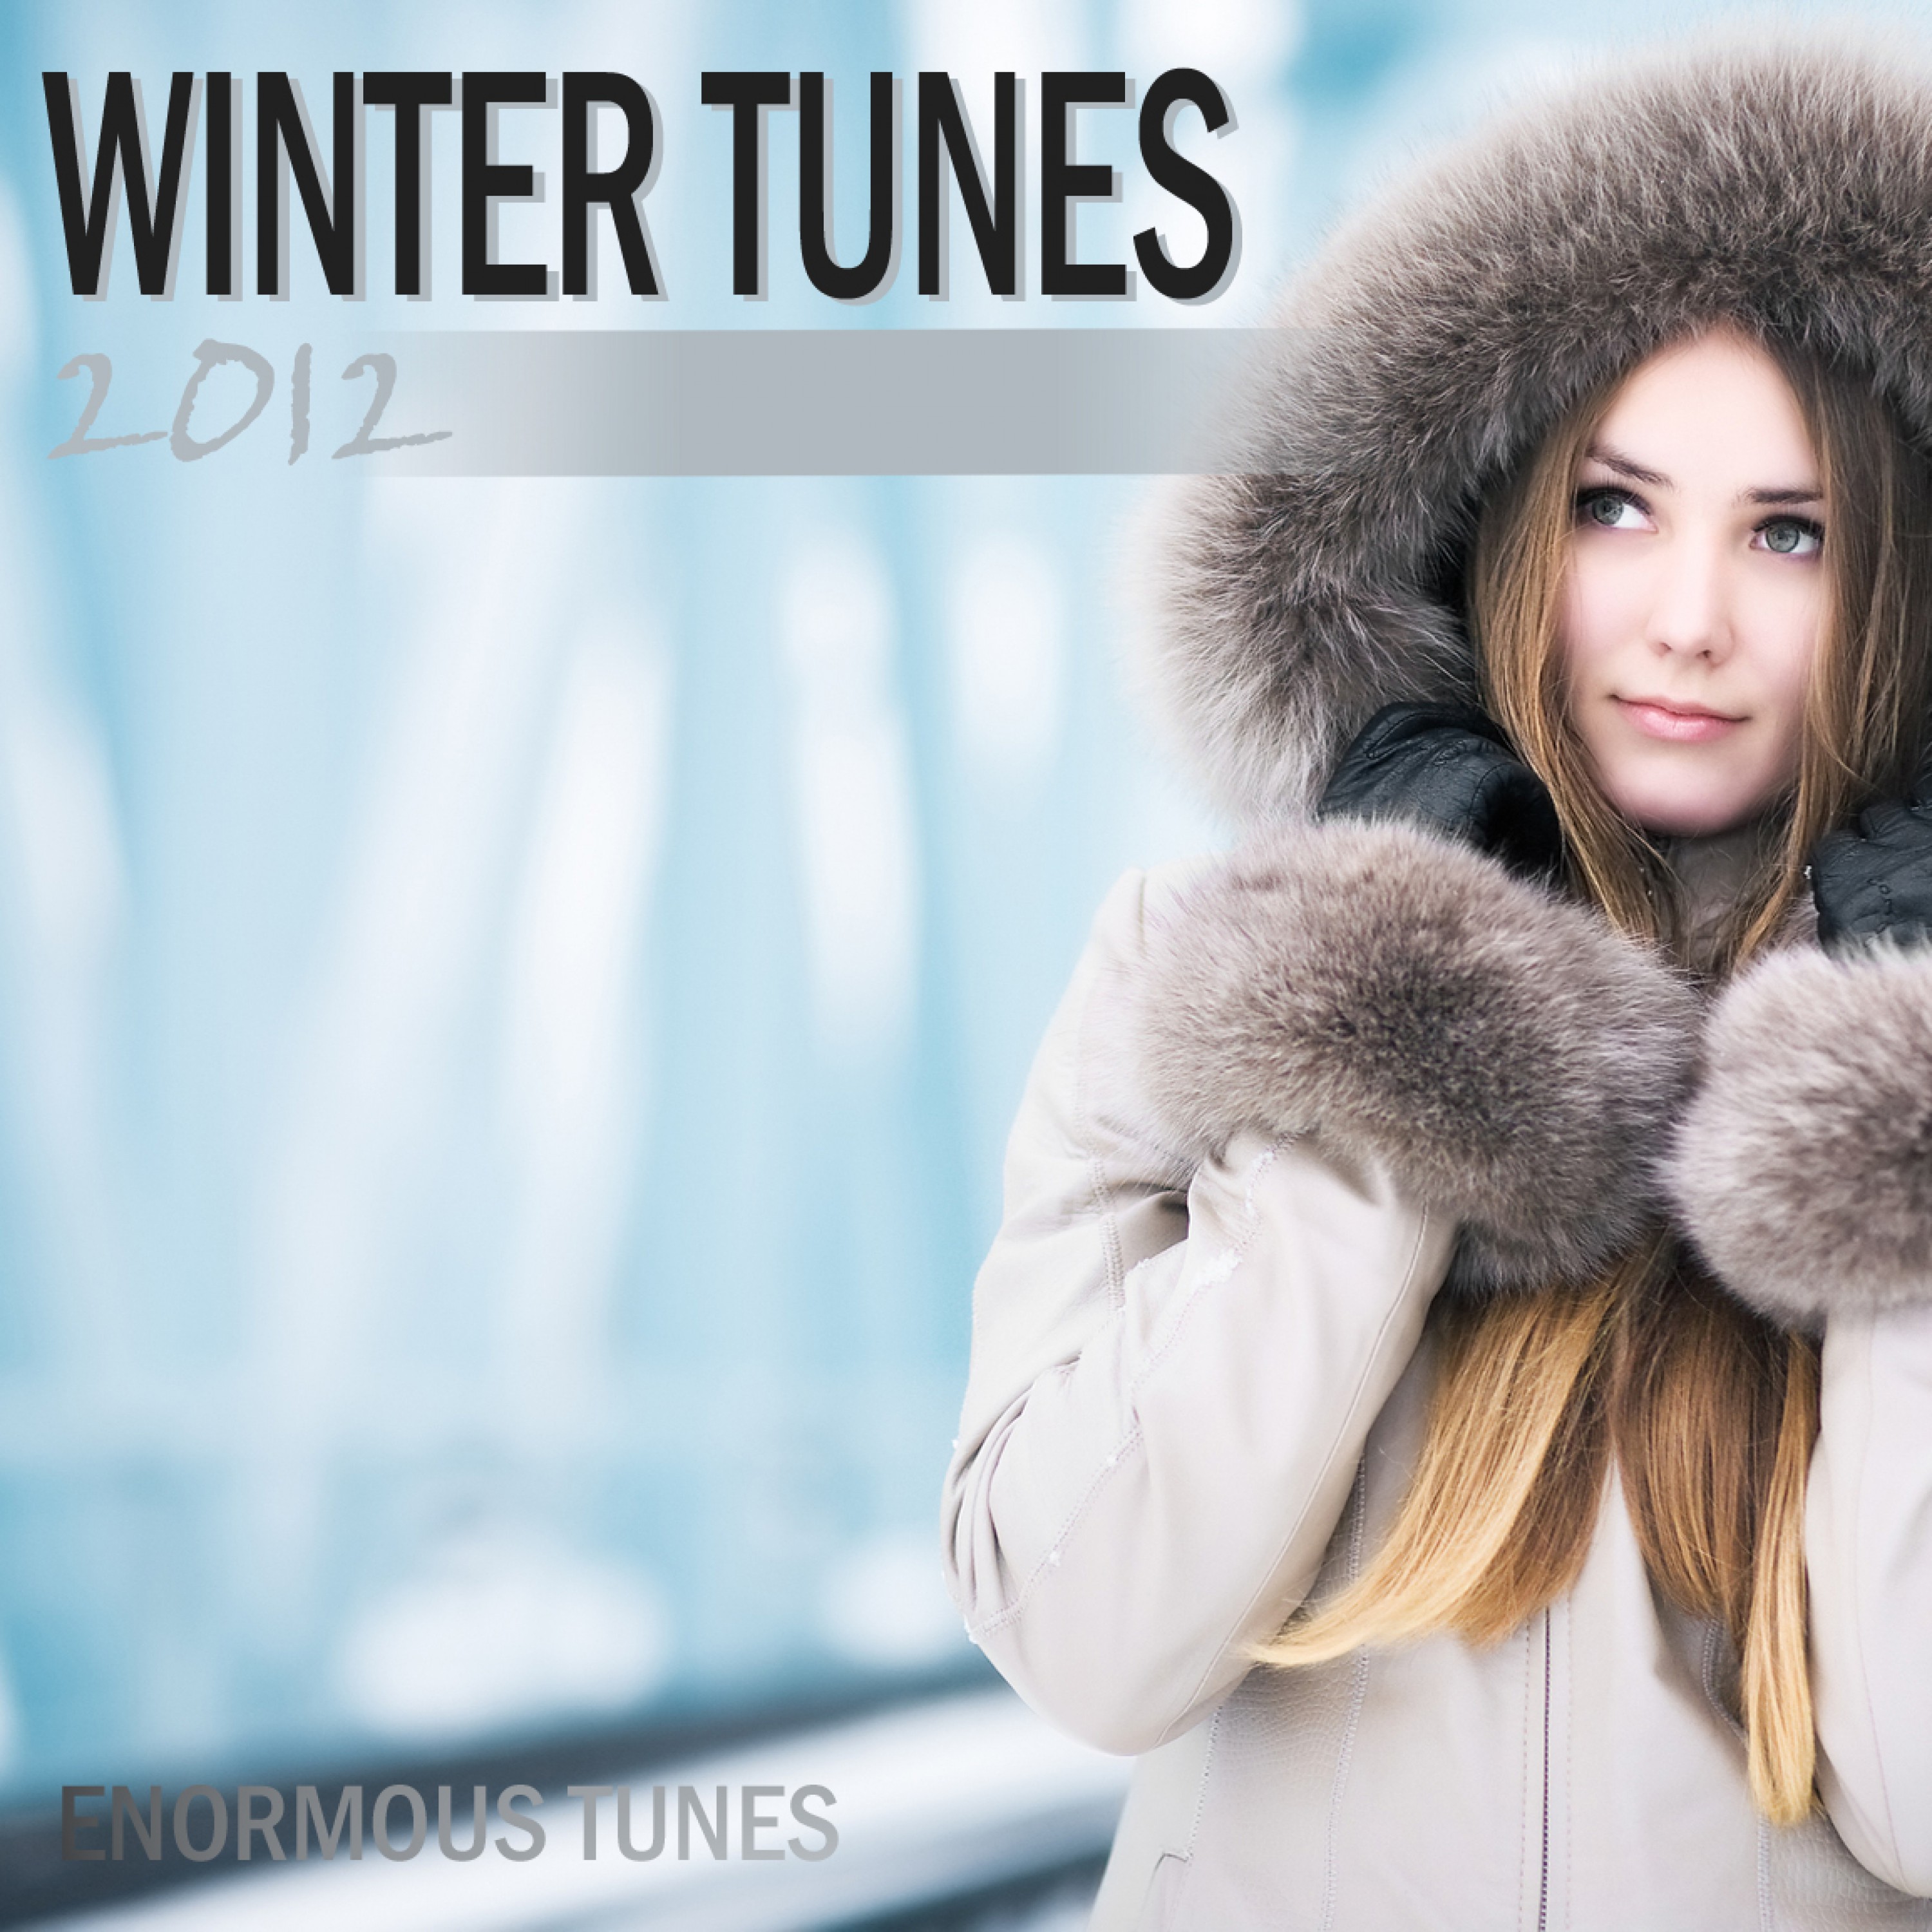 Winter Tunes 2012